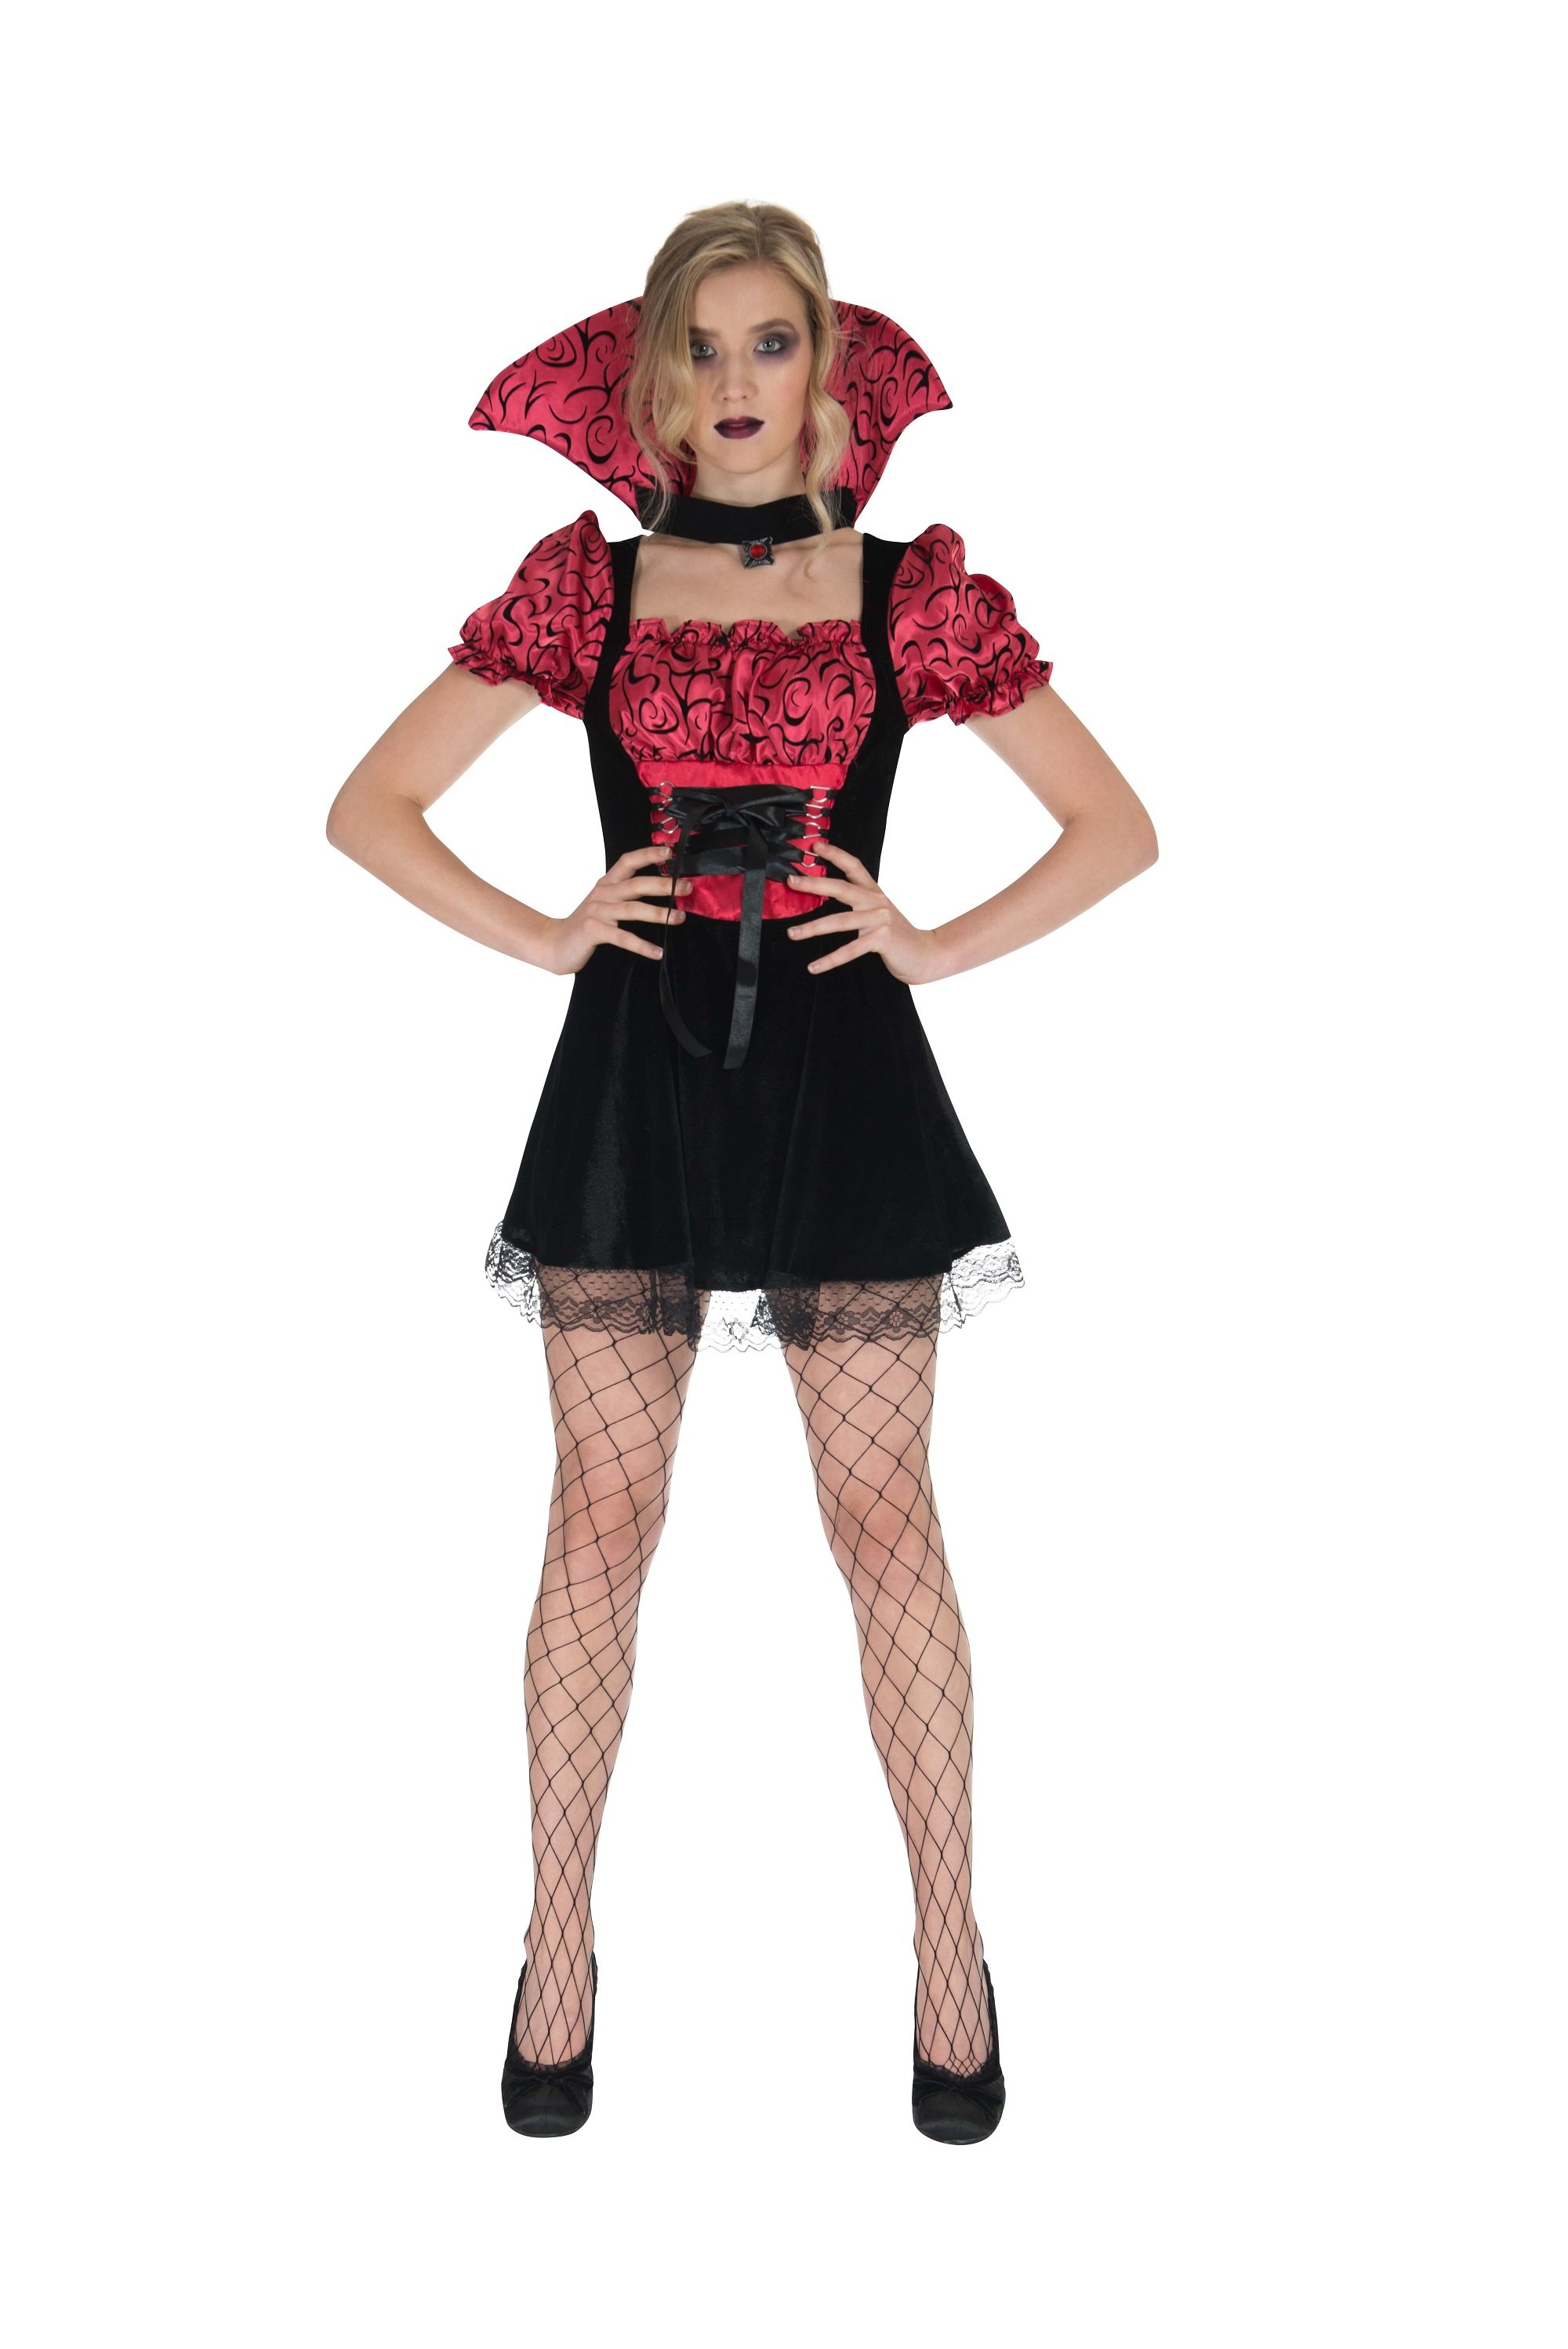 Vampiress Costume - GetLoveMall cheap products,wholesale,on sale,